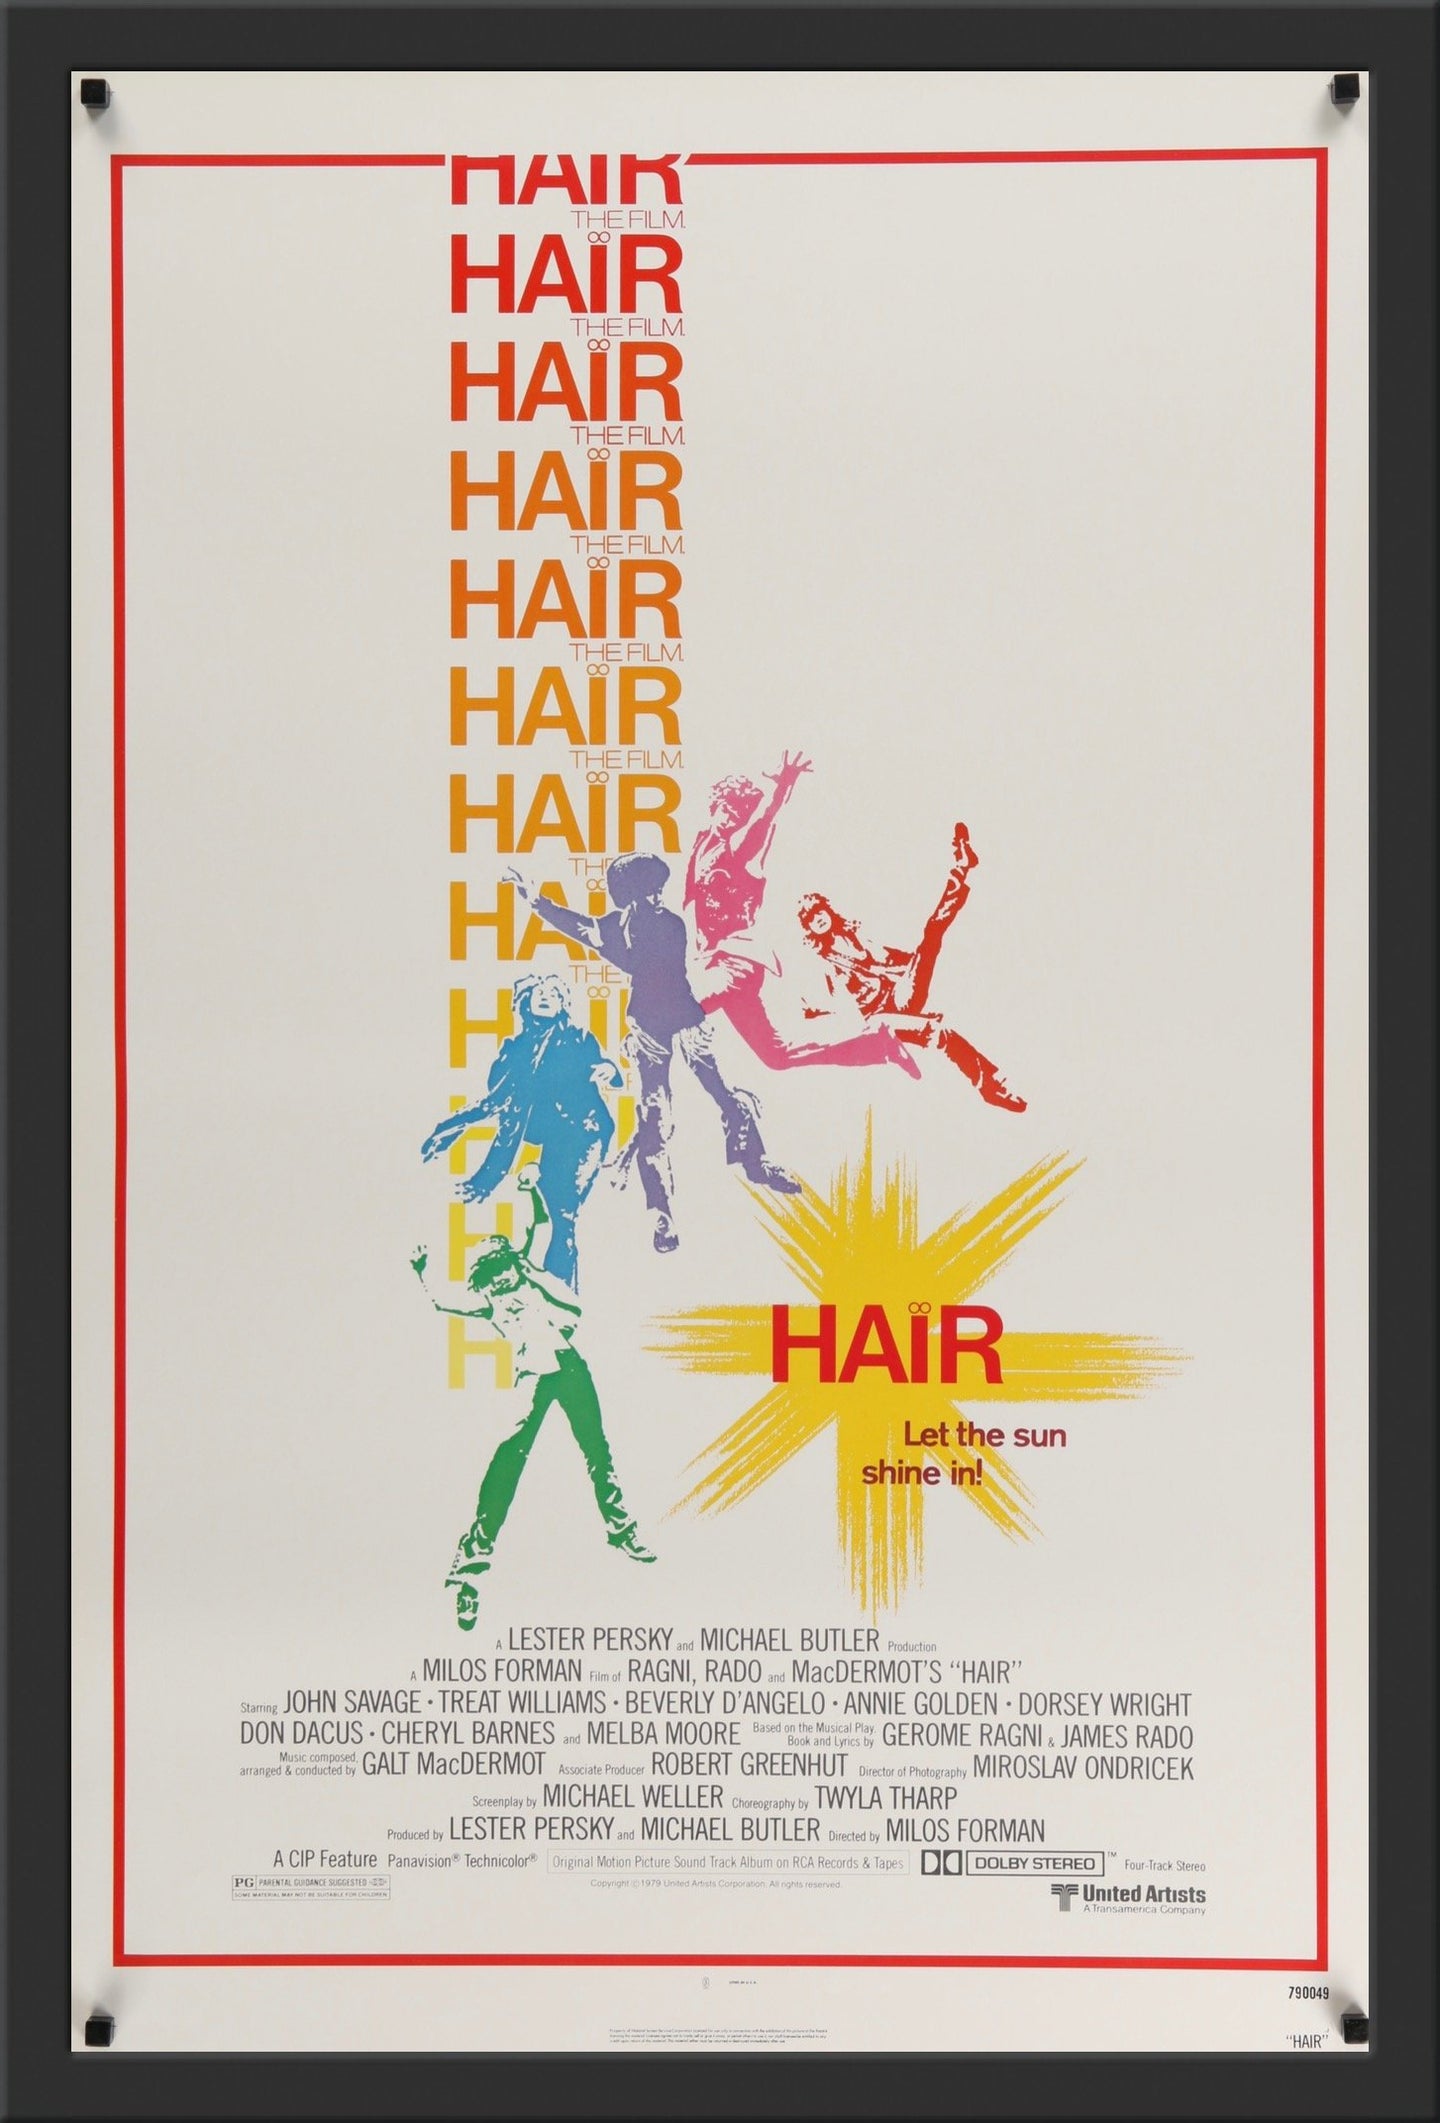 An original movie poster for the Milos Forman film Hair